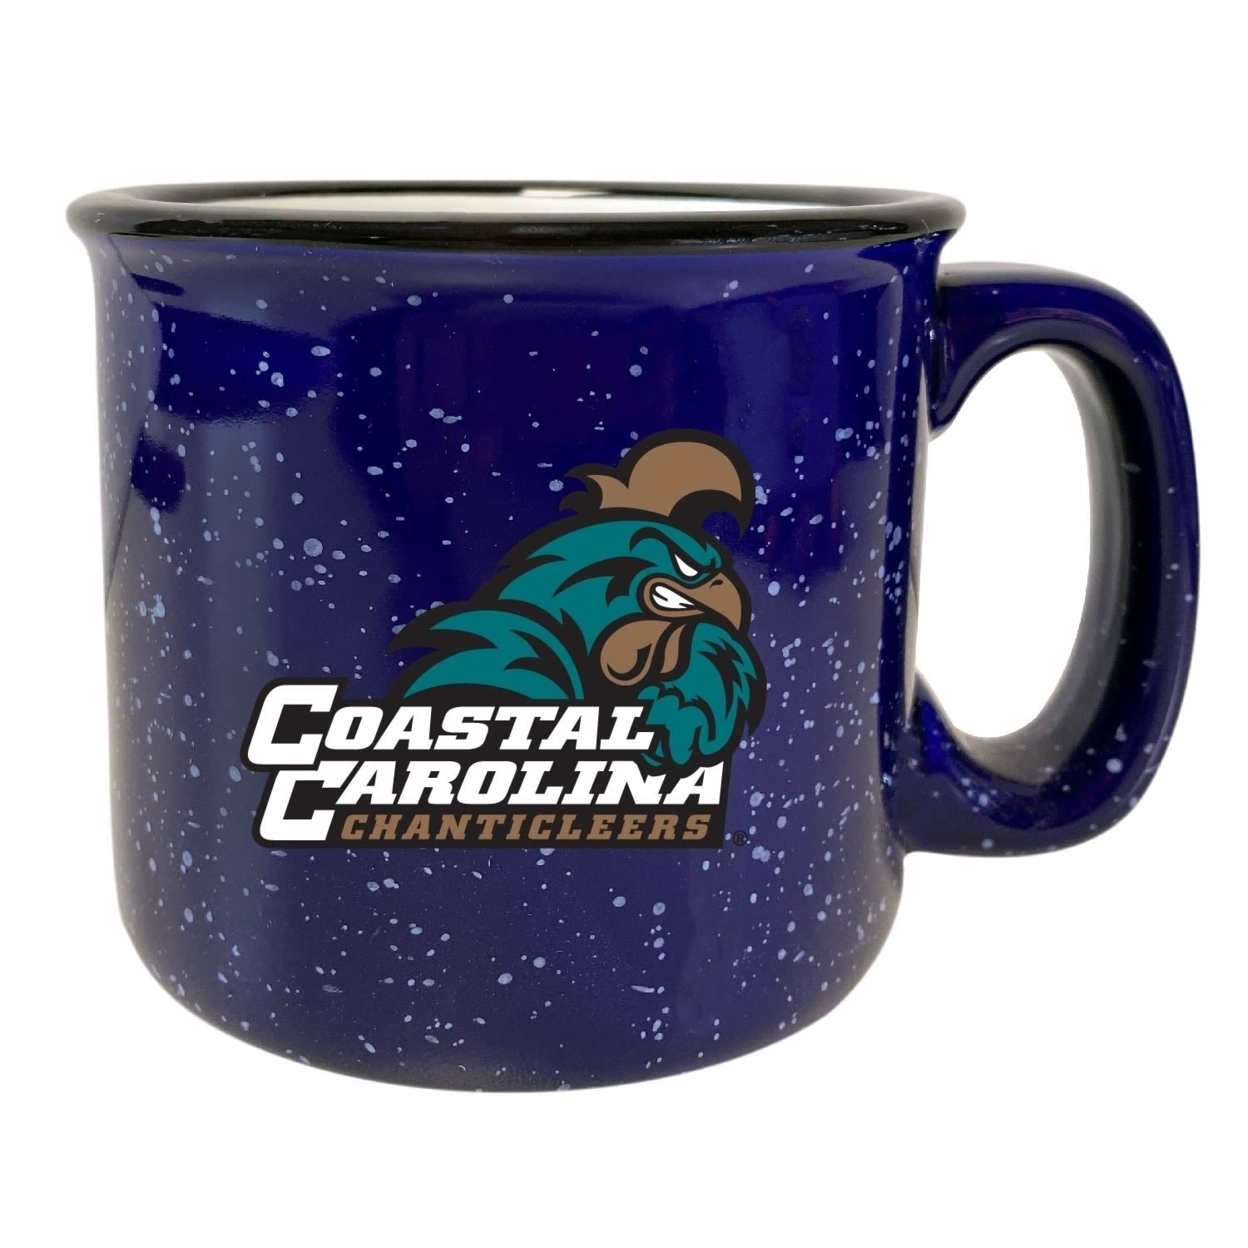 Coastal Carolina University Speckled Ceramic Mug 2 Pack